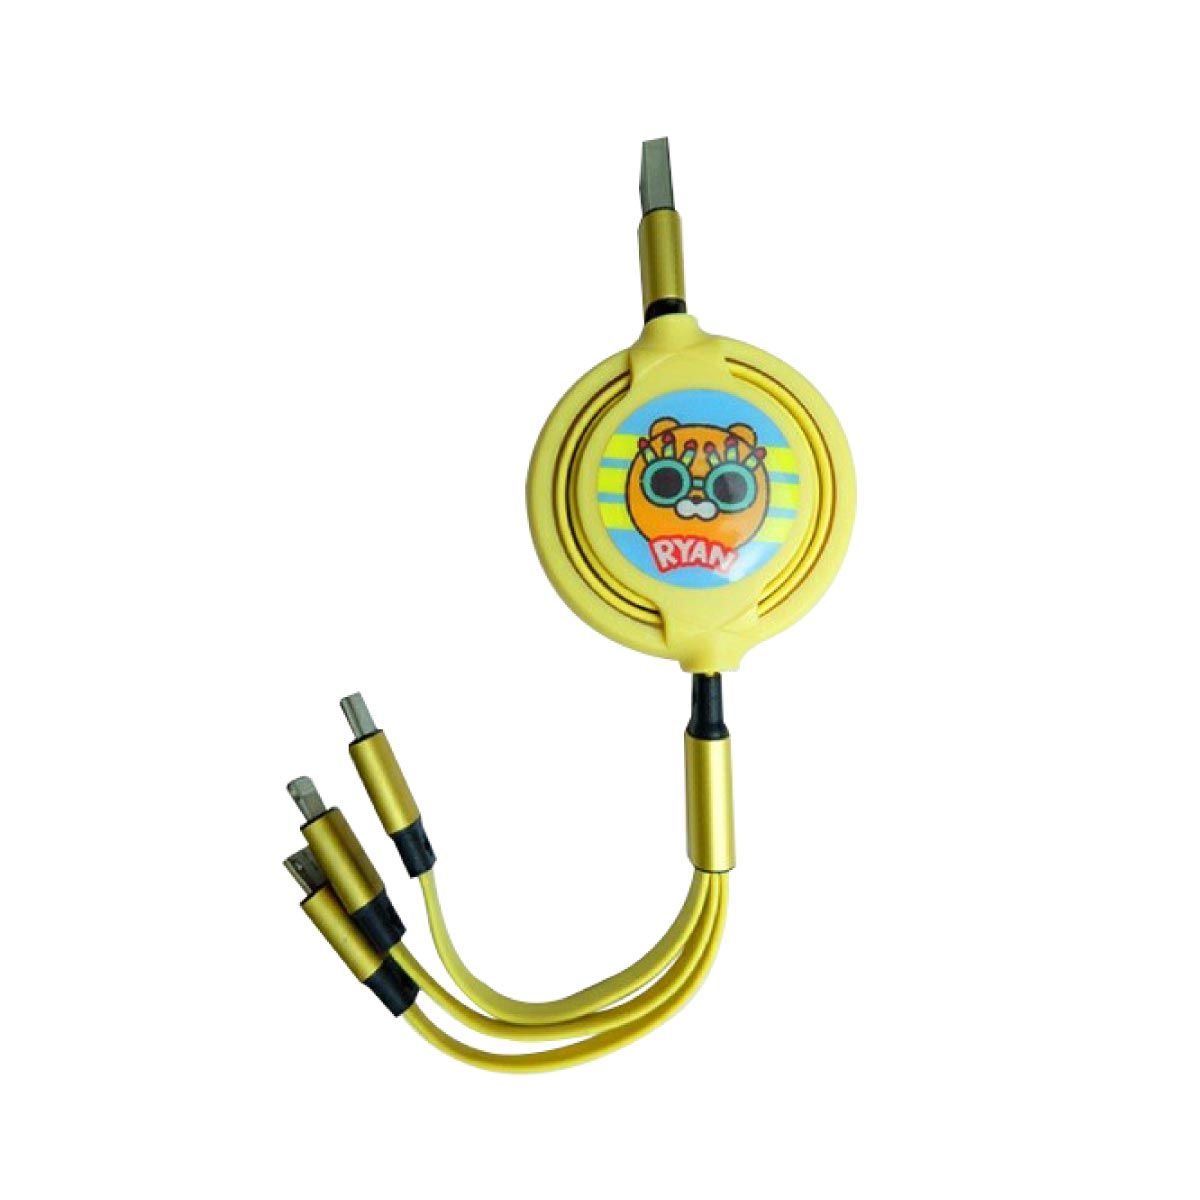 YOOBAO สายชาร์จ 3 in 1 Cable Type-C / Micro / Lightning รุ่น YB31 (Yellow)